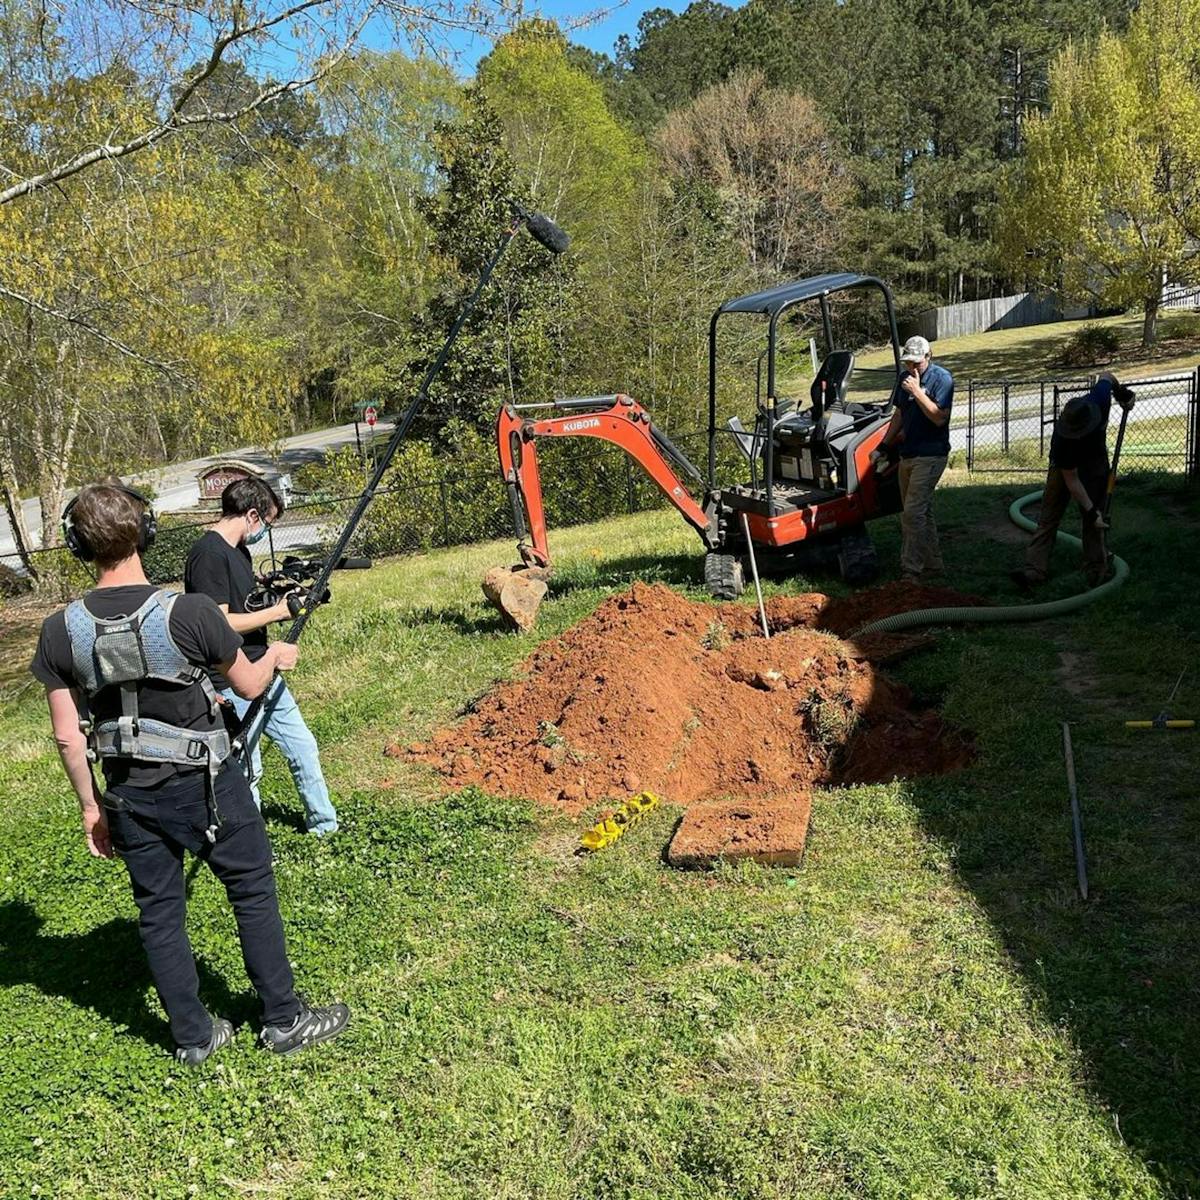 The team films some excavation work.